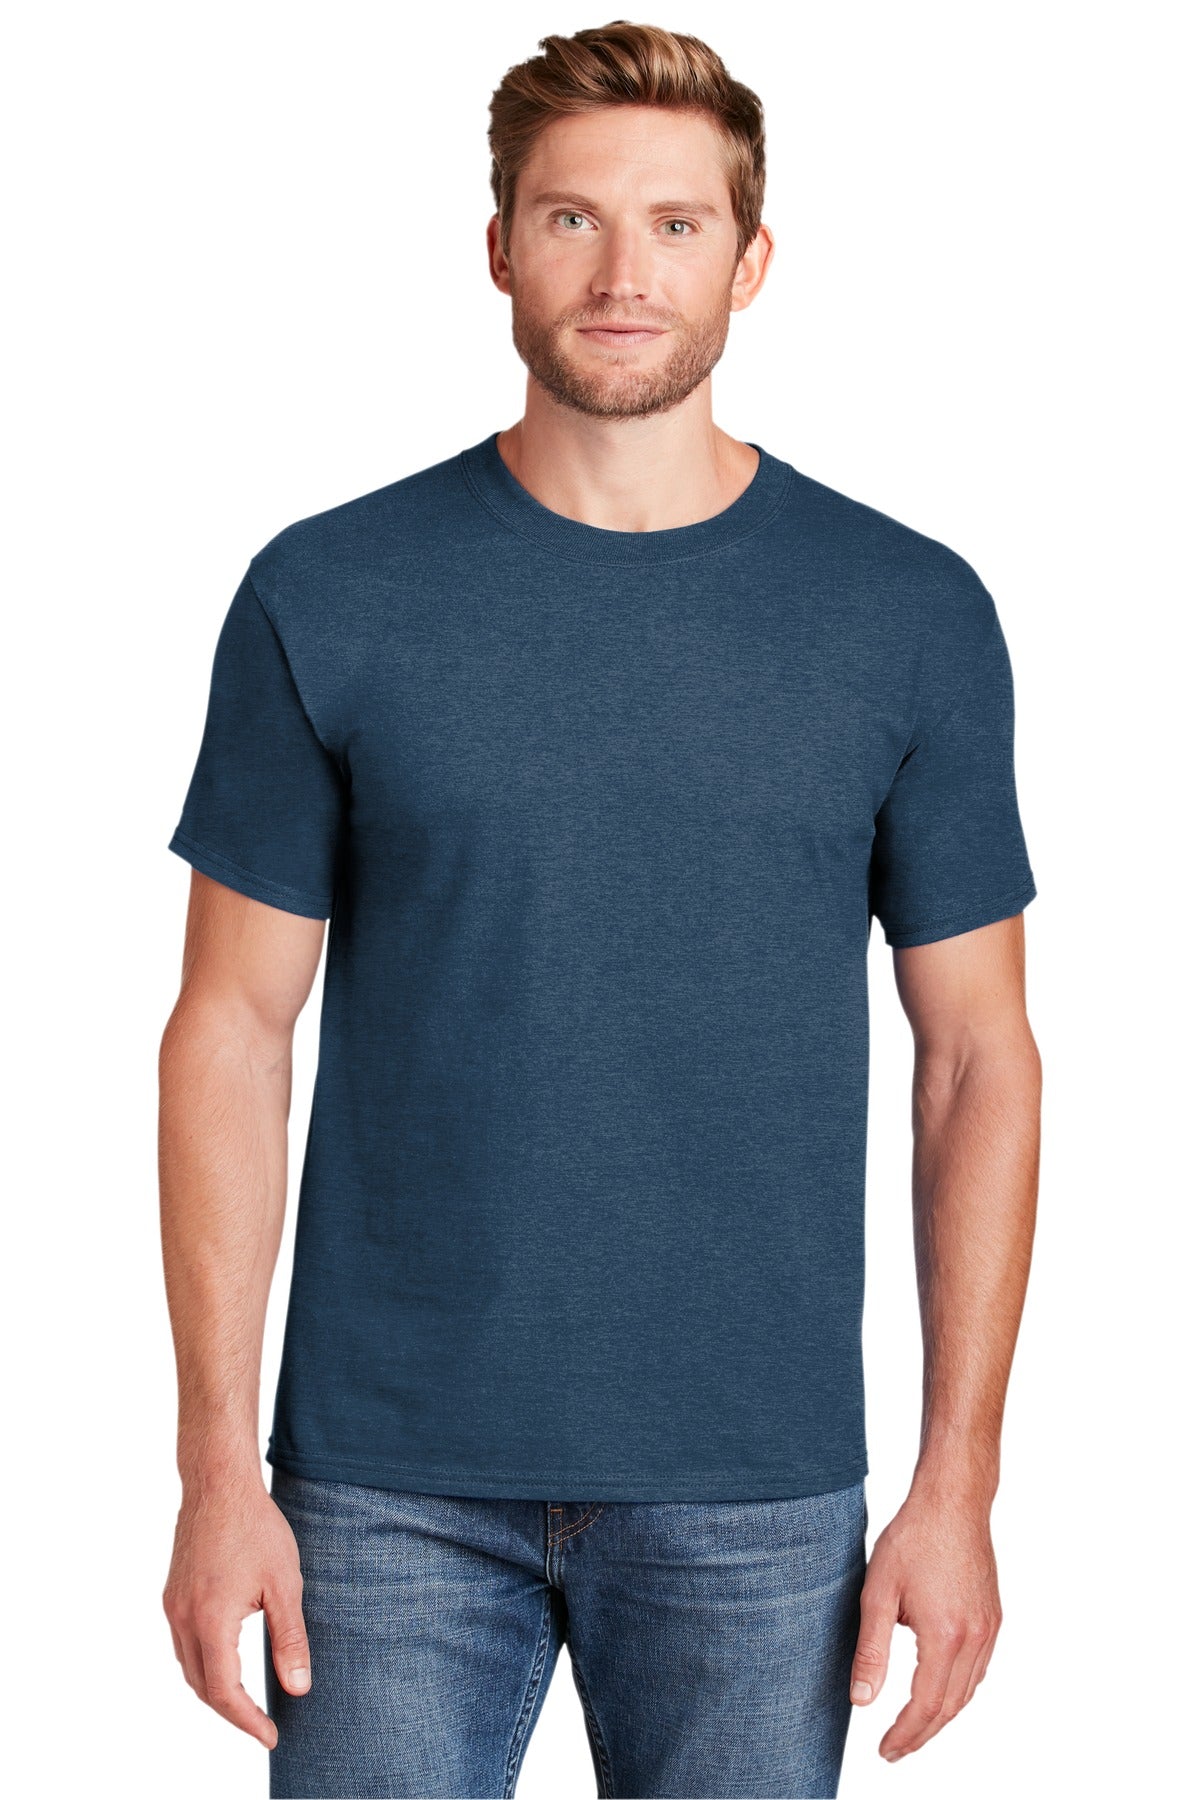 Hanes® Beefy-T® - 100% Cotton T-Shirt. 5180 [Heather Blue] - DFW Impression